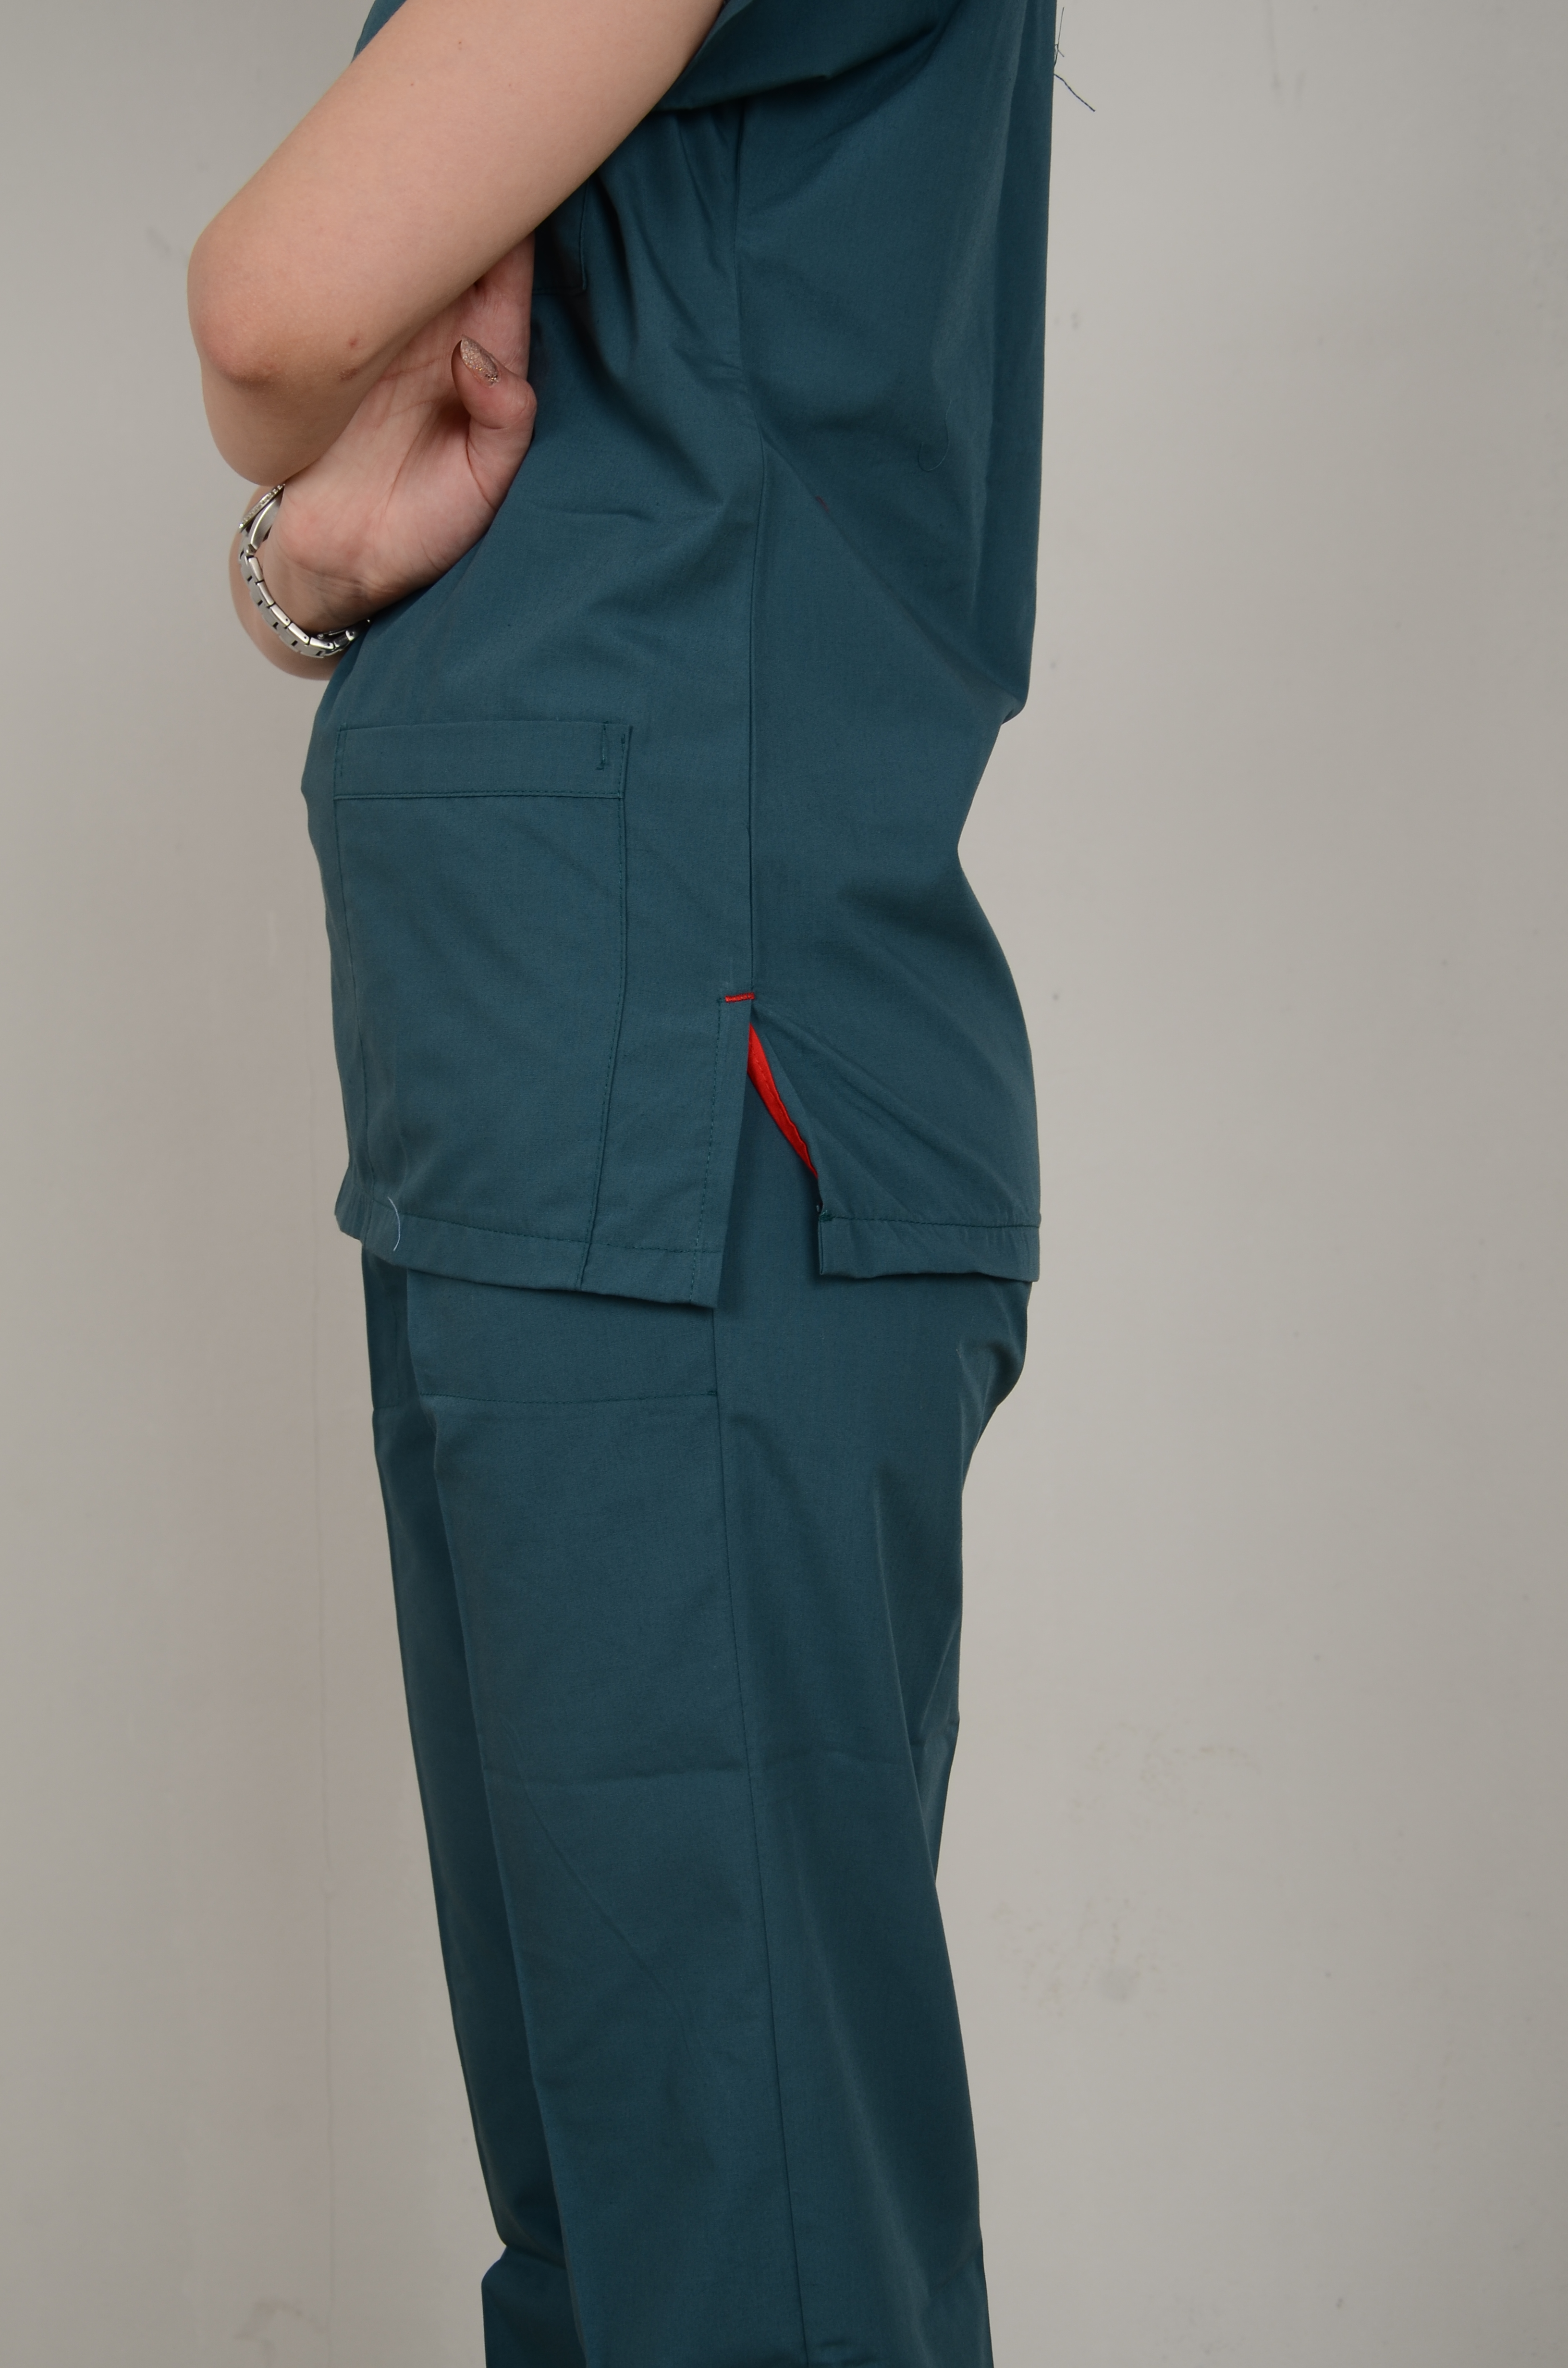 hospital uniform nurse uniform dentist uniform veterinary uniform women men unisex full dress